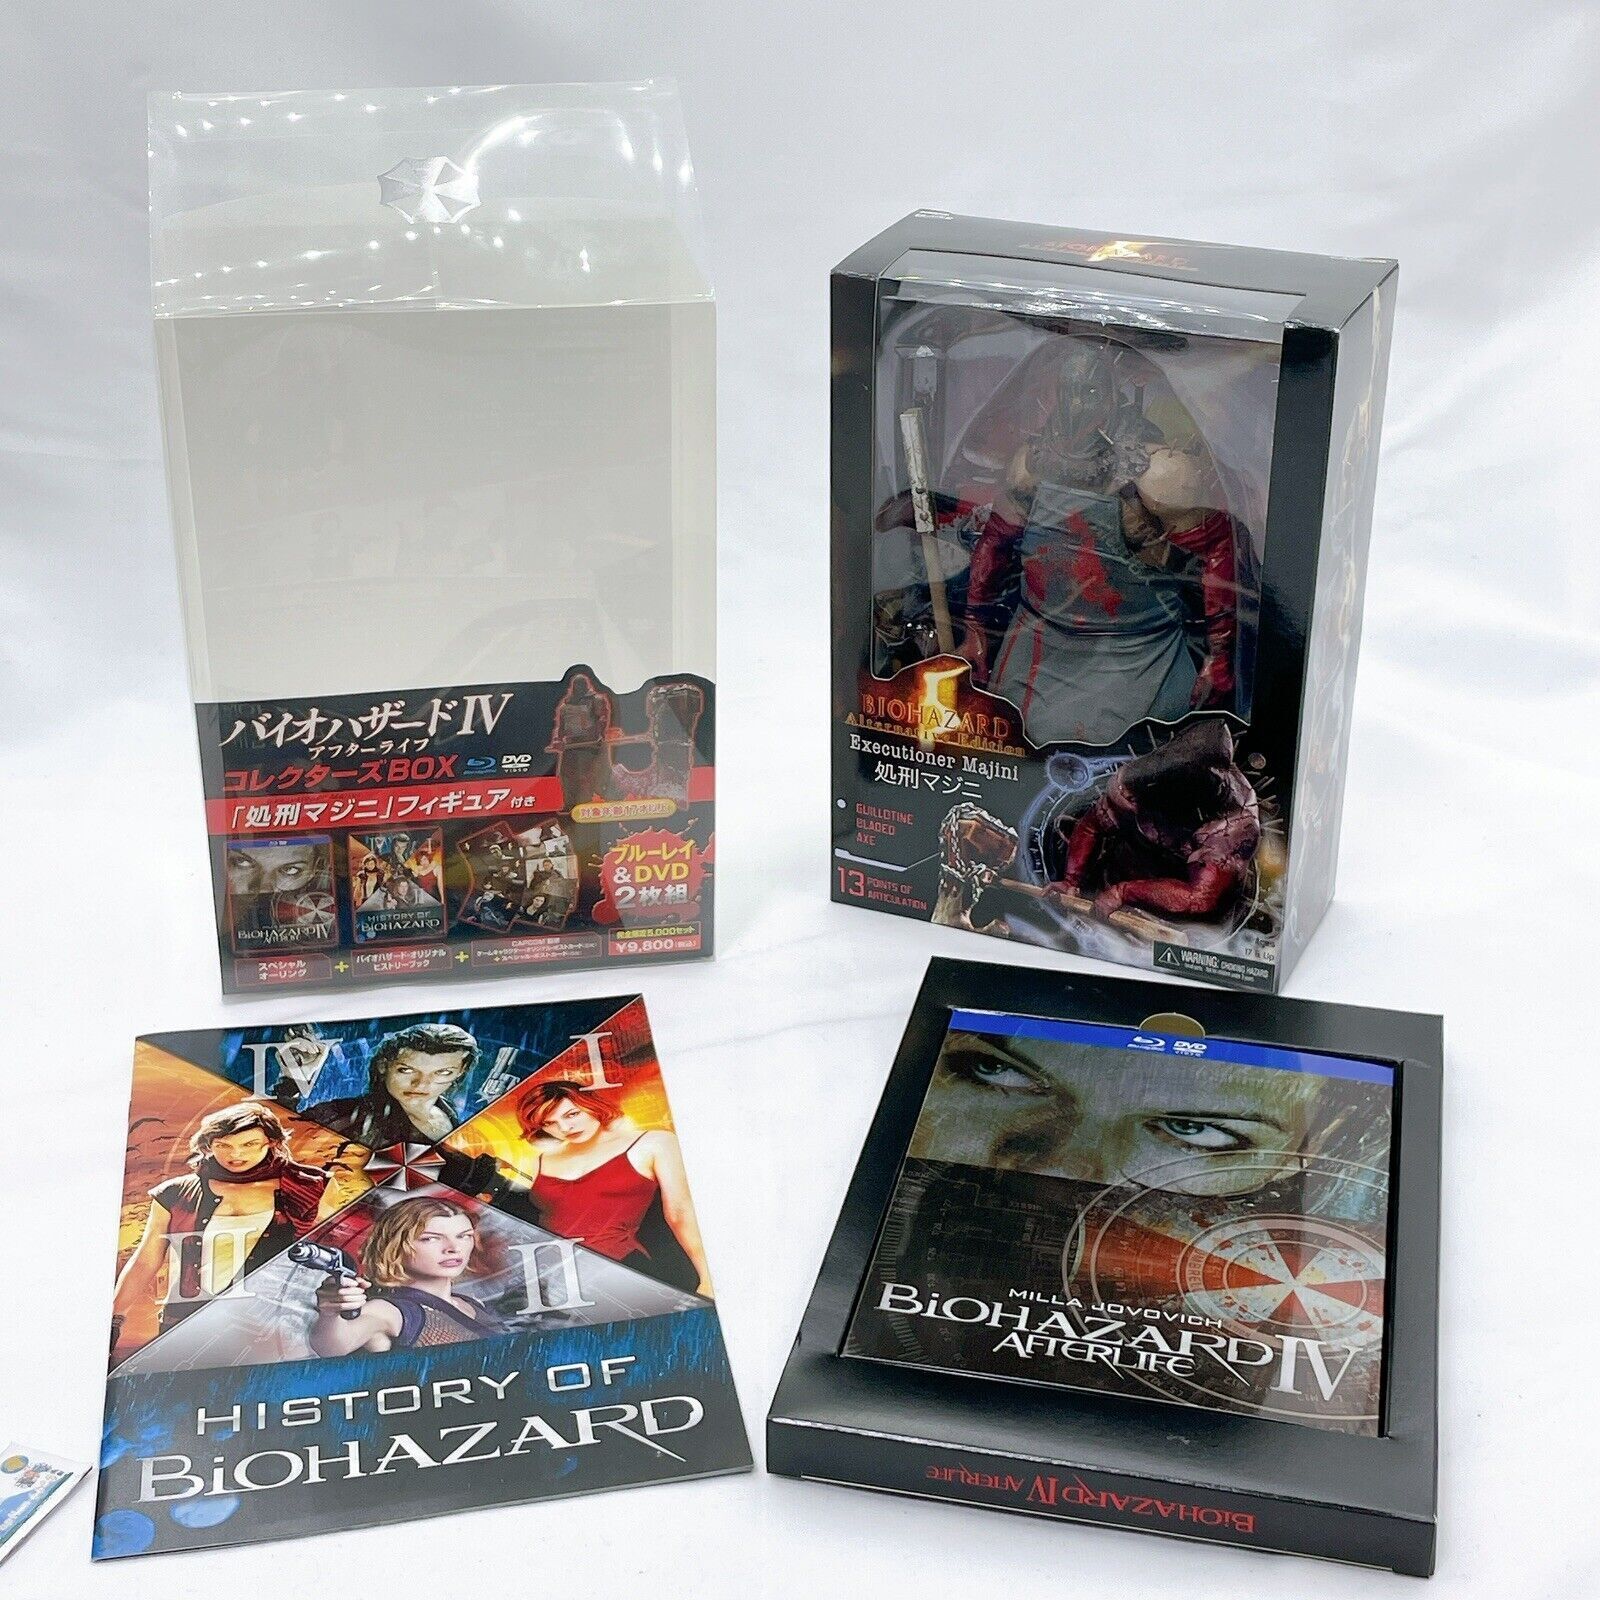 Resident Evil Afterlife Blu-Ray DVD Figure Collector's BOX BIOHAZARD 4 Majini